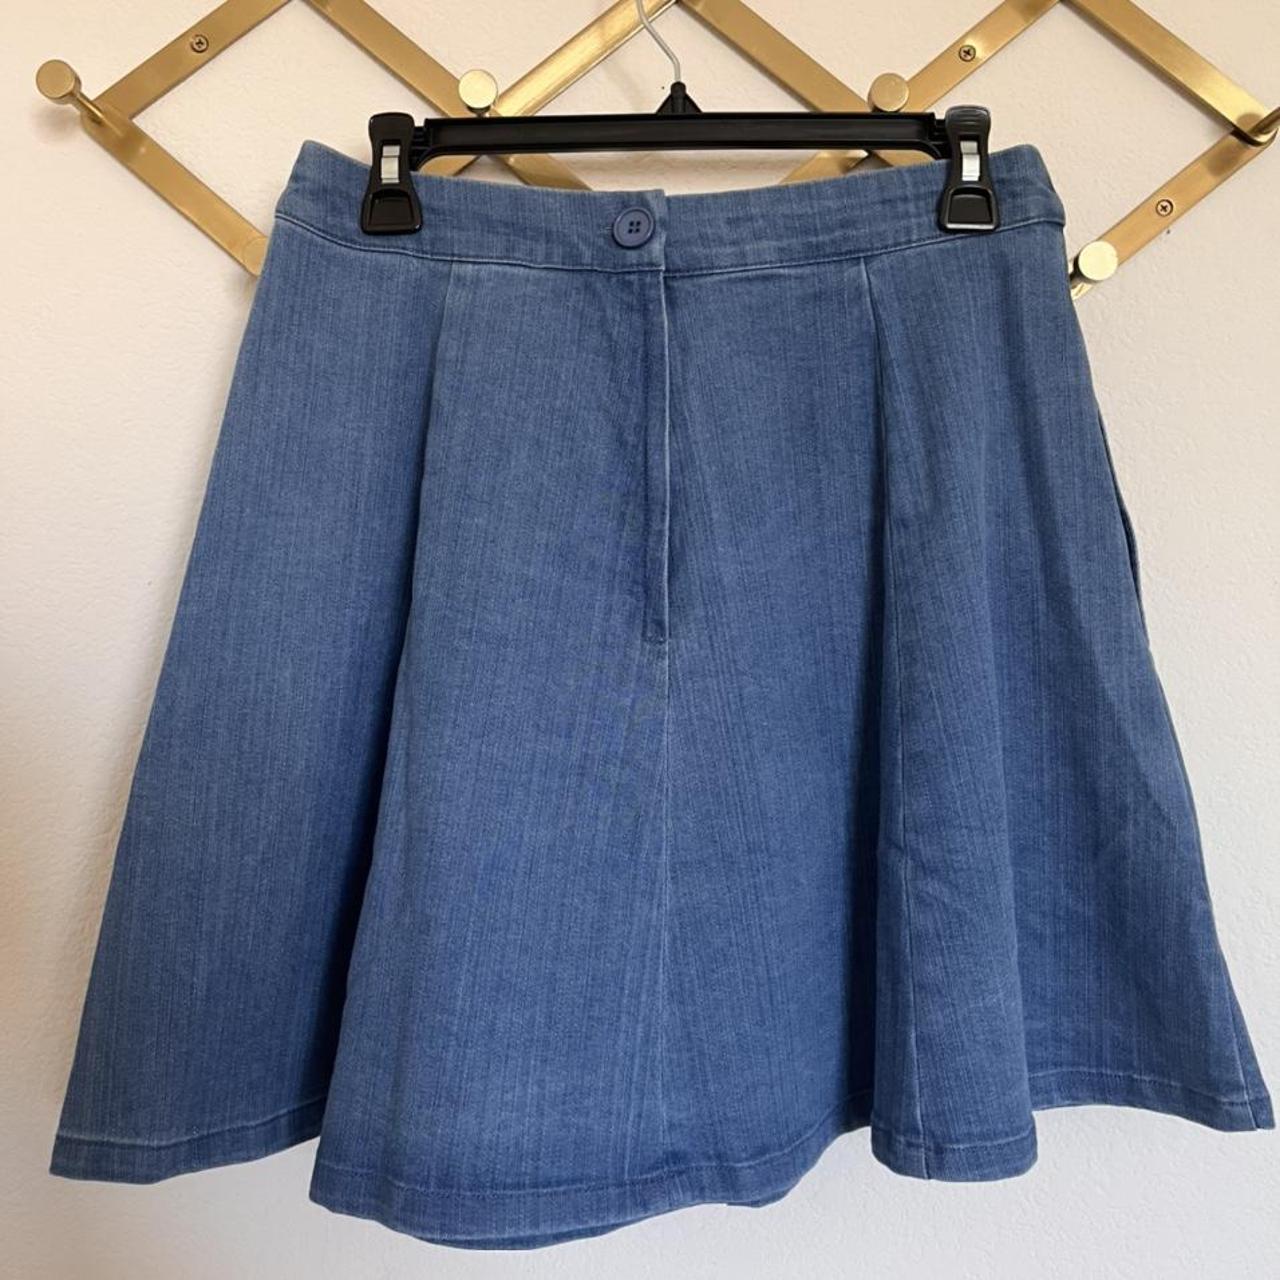 Product Image 3 - Denim Skater
medium denim skirt with